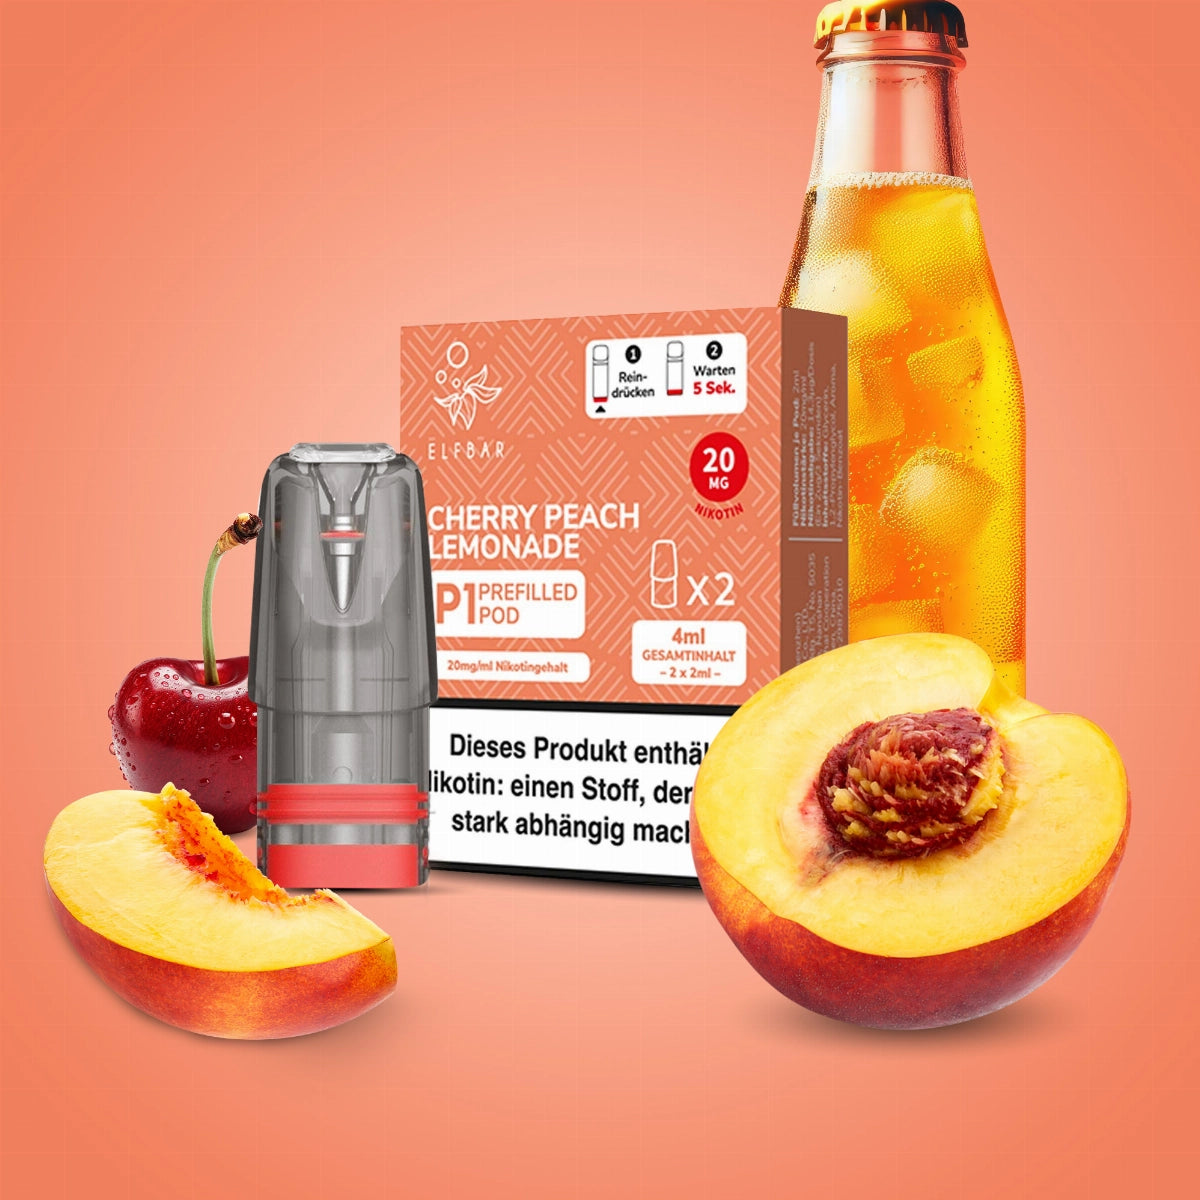 Elfbar MATE500 P1 Prefilled Pod - Cherry Peach Lemonade (10 Stück)